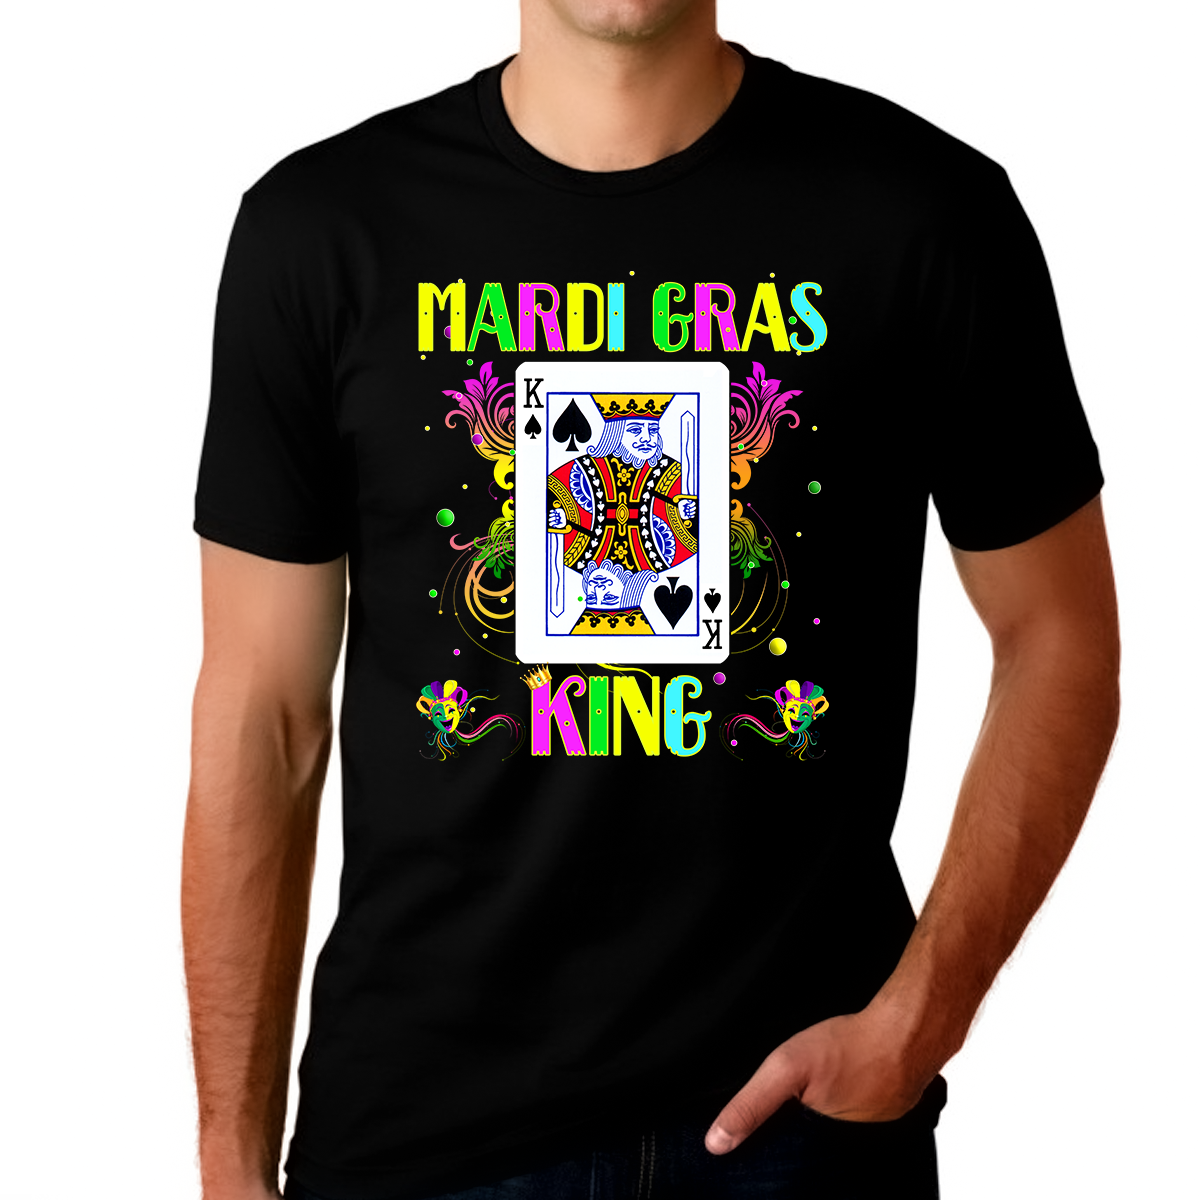 Mardi Gras Shirts for Men Mardi Gras King Mardi Gras Playing Cards King Mardi Gras Shirt Mardi Gras Outfit